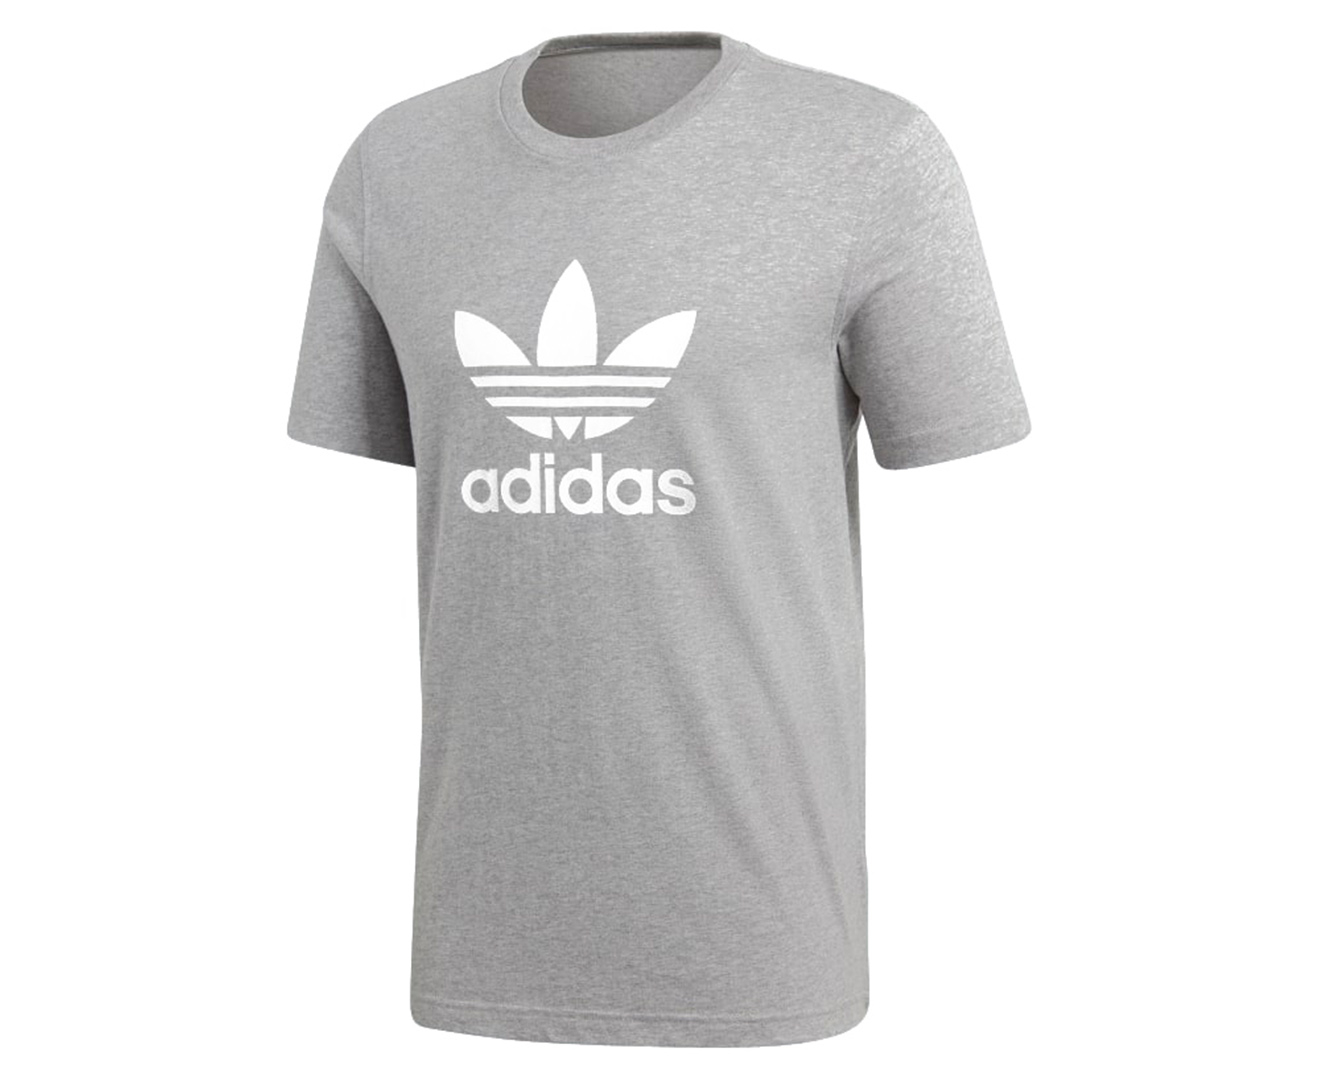 Adidas Originals Men's Trefoil Tee / T-Shirt / Tshirt - Grey Heather ...